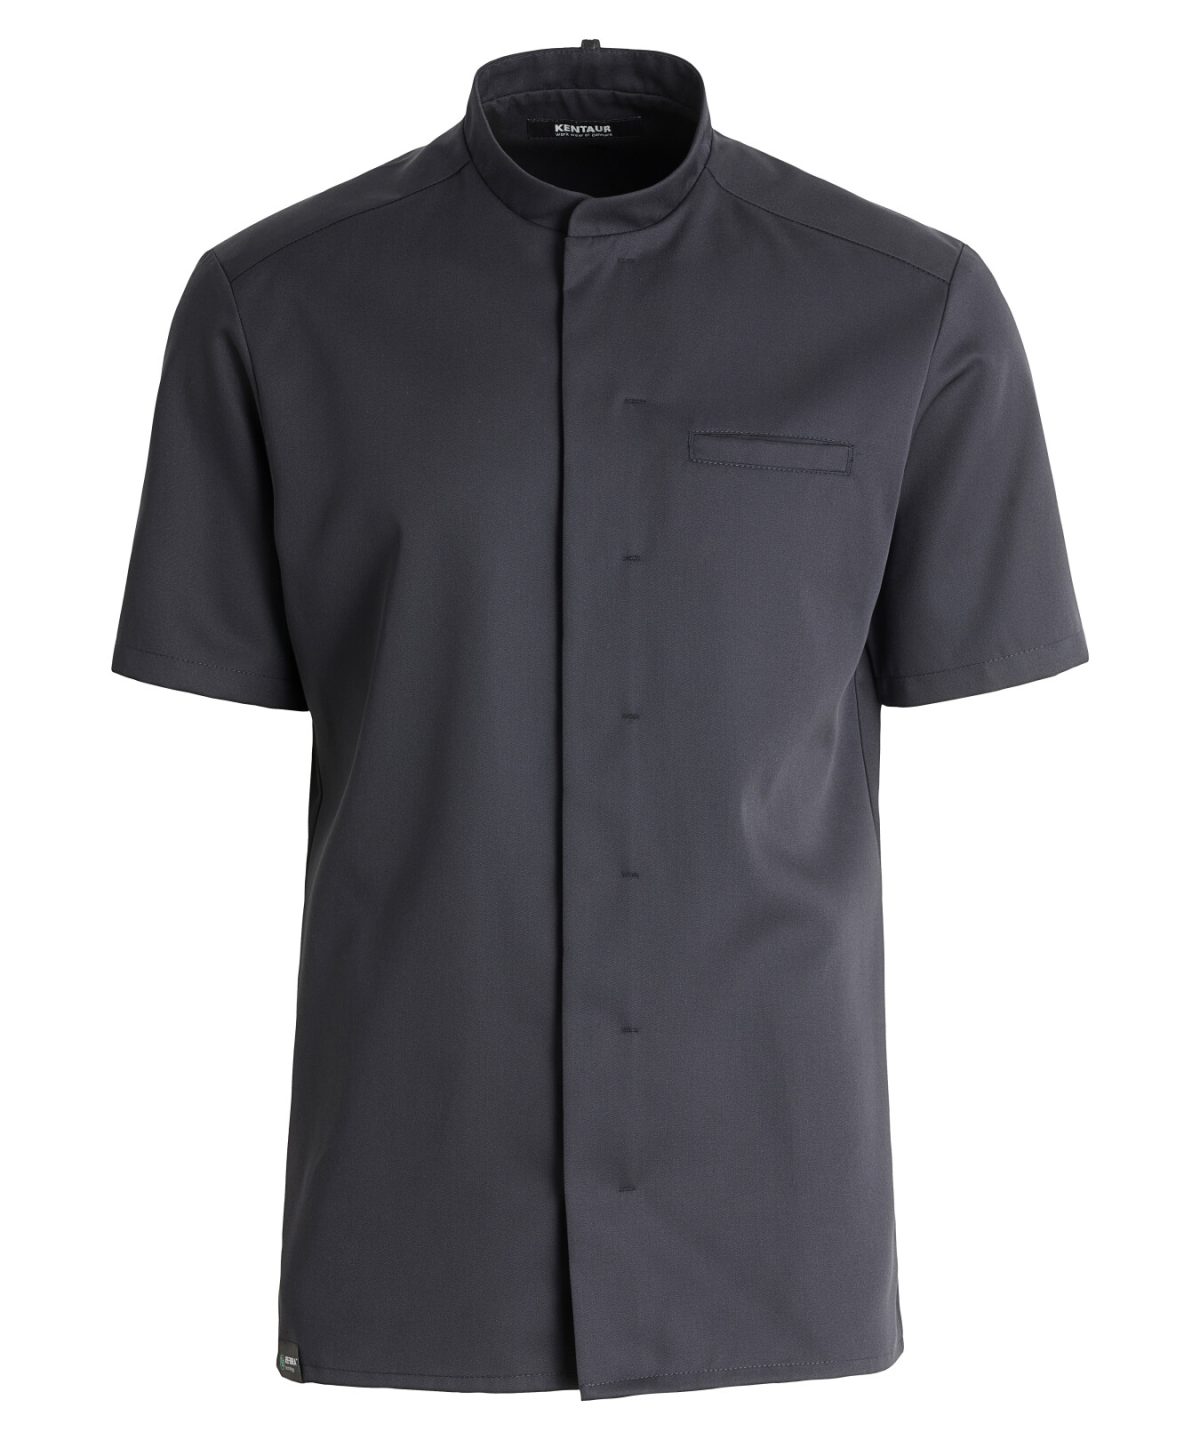 Kuchárske oblečenie KENTAUR - rondón čierny, krátky rukáv